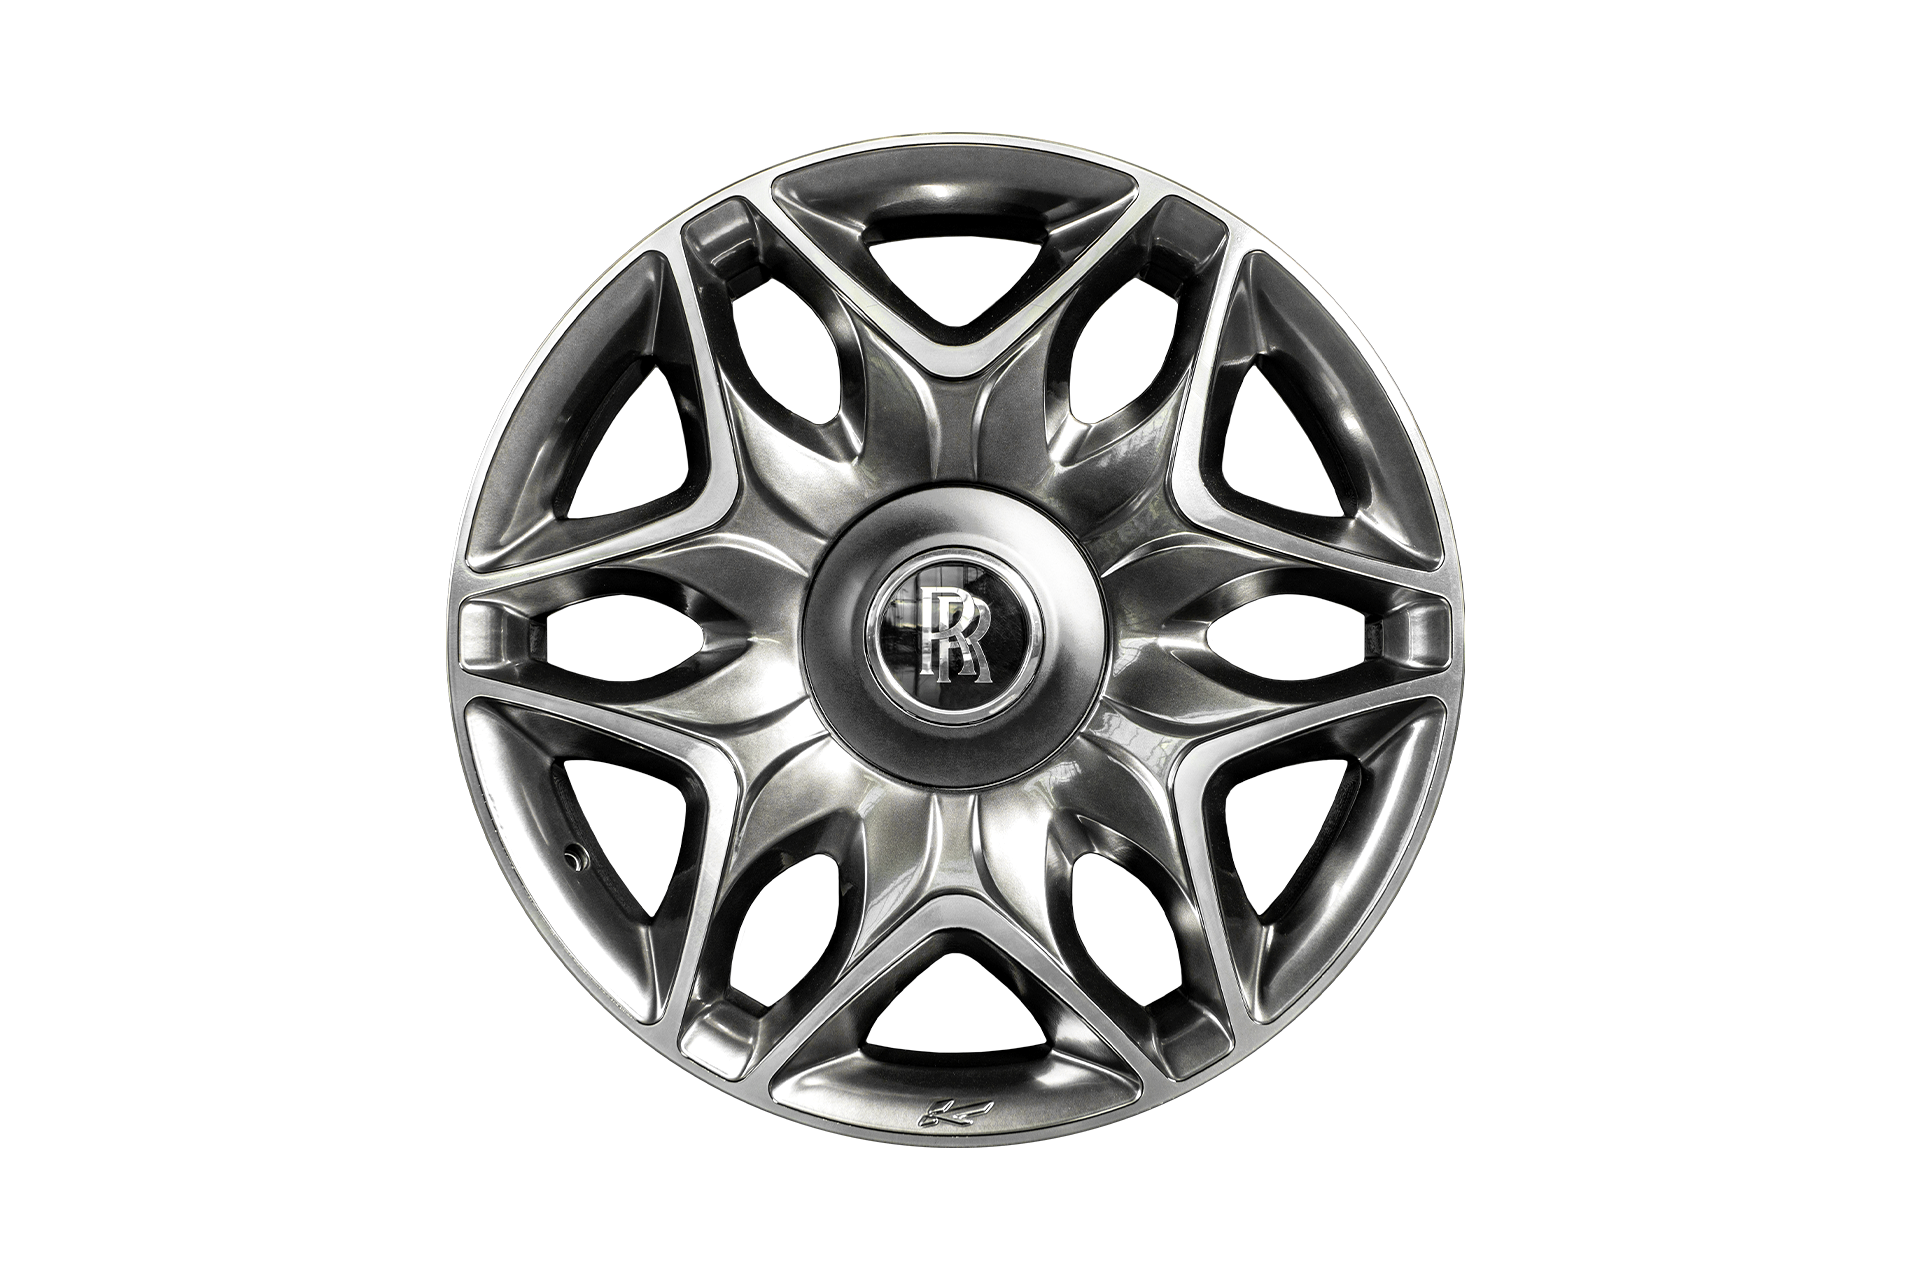 Split 6 Light Alloy Wheels Suitable For Rolls Royce Phantom Drop Head (2007-PRESENT)